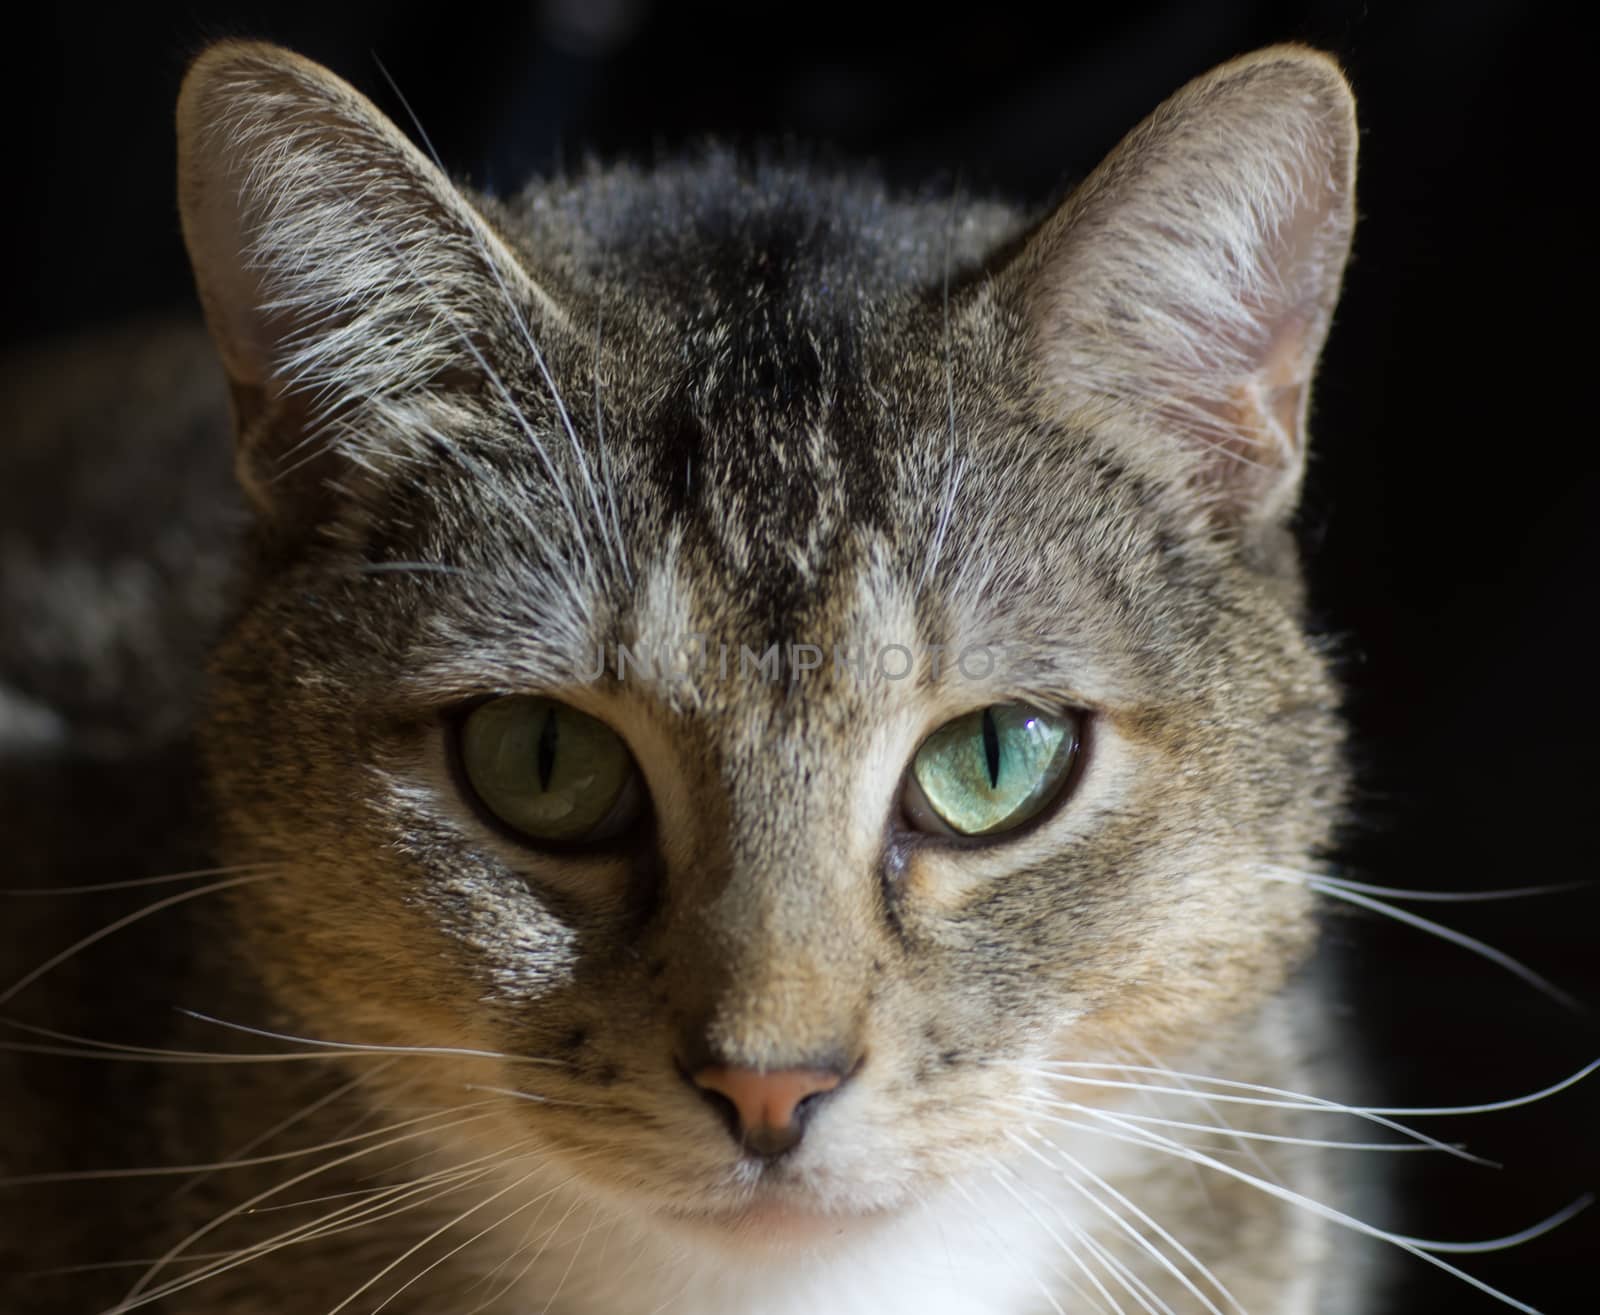 cat Portrait by FotoFrank